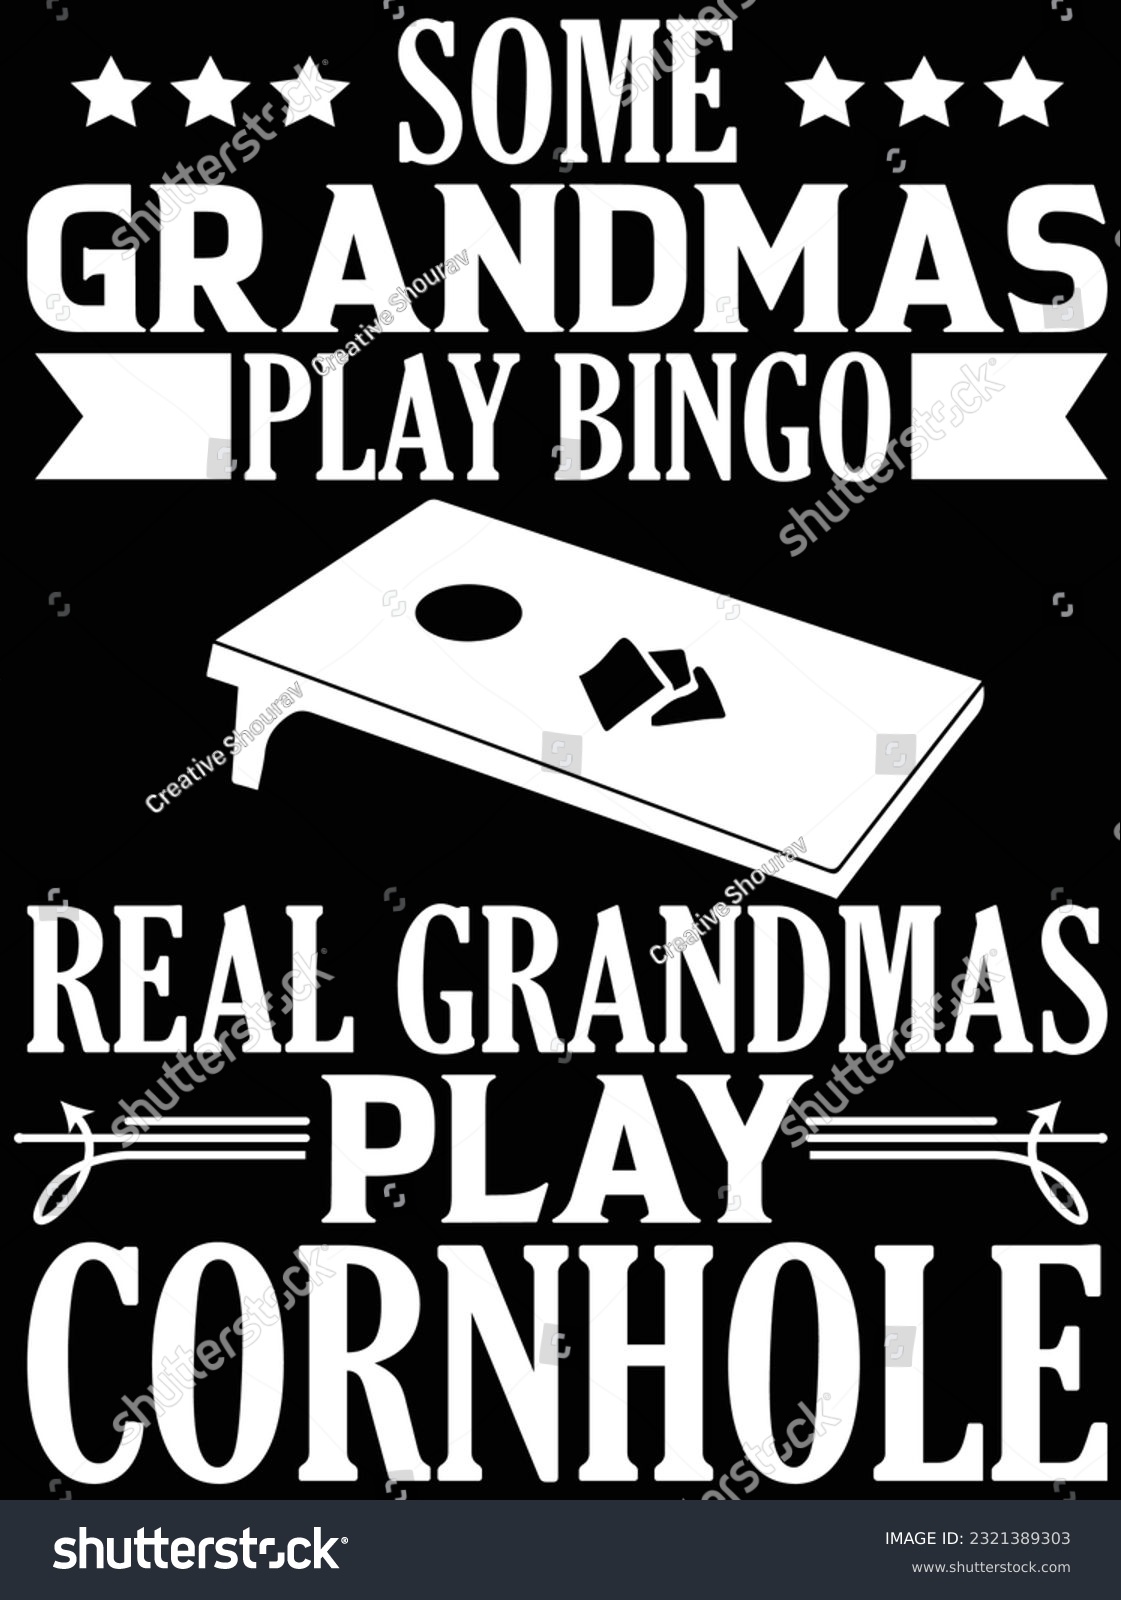 SVG of Some grandmas play bingo real grandmas cornhole vector art design, eps file. design file for t-shirt. SVG, EPS cuttable design file svg